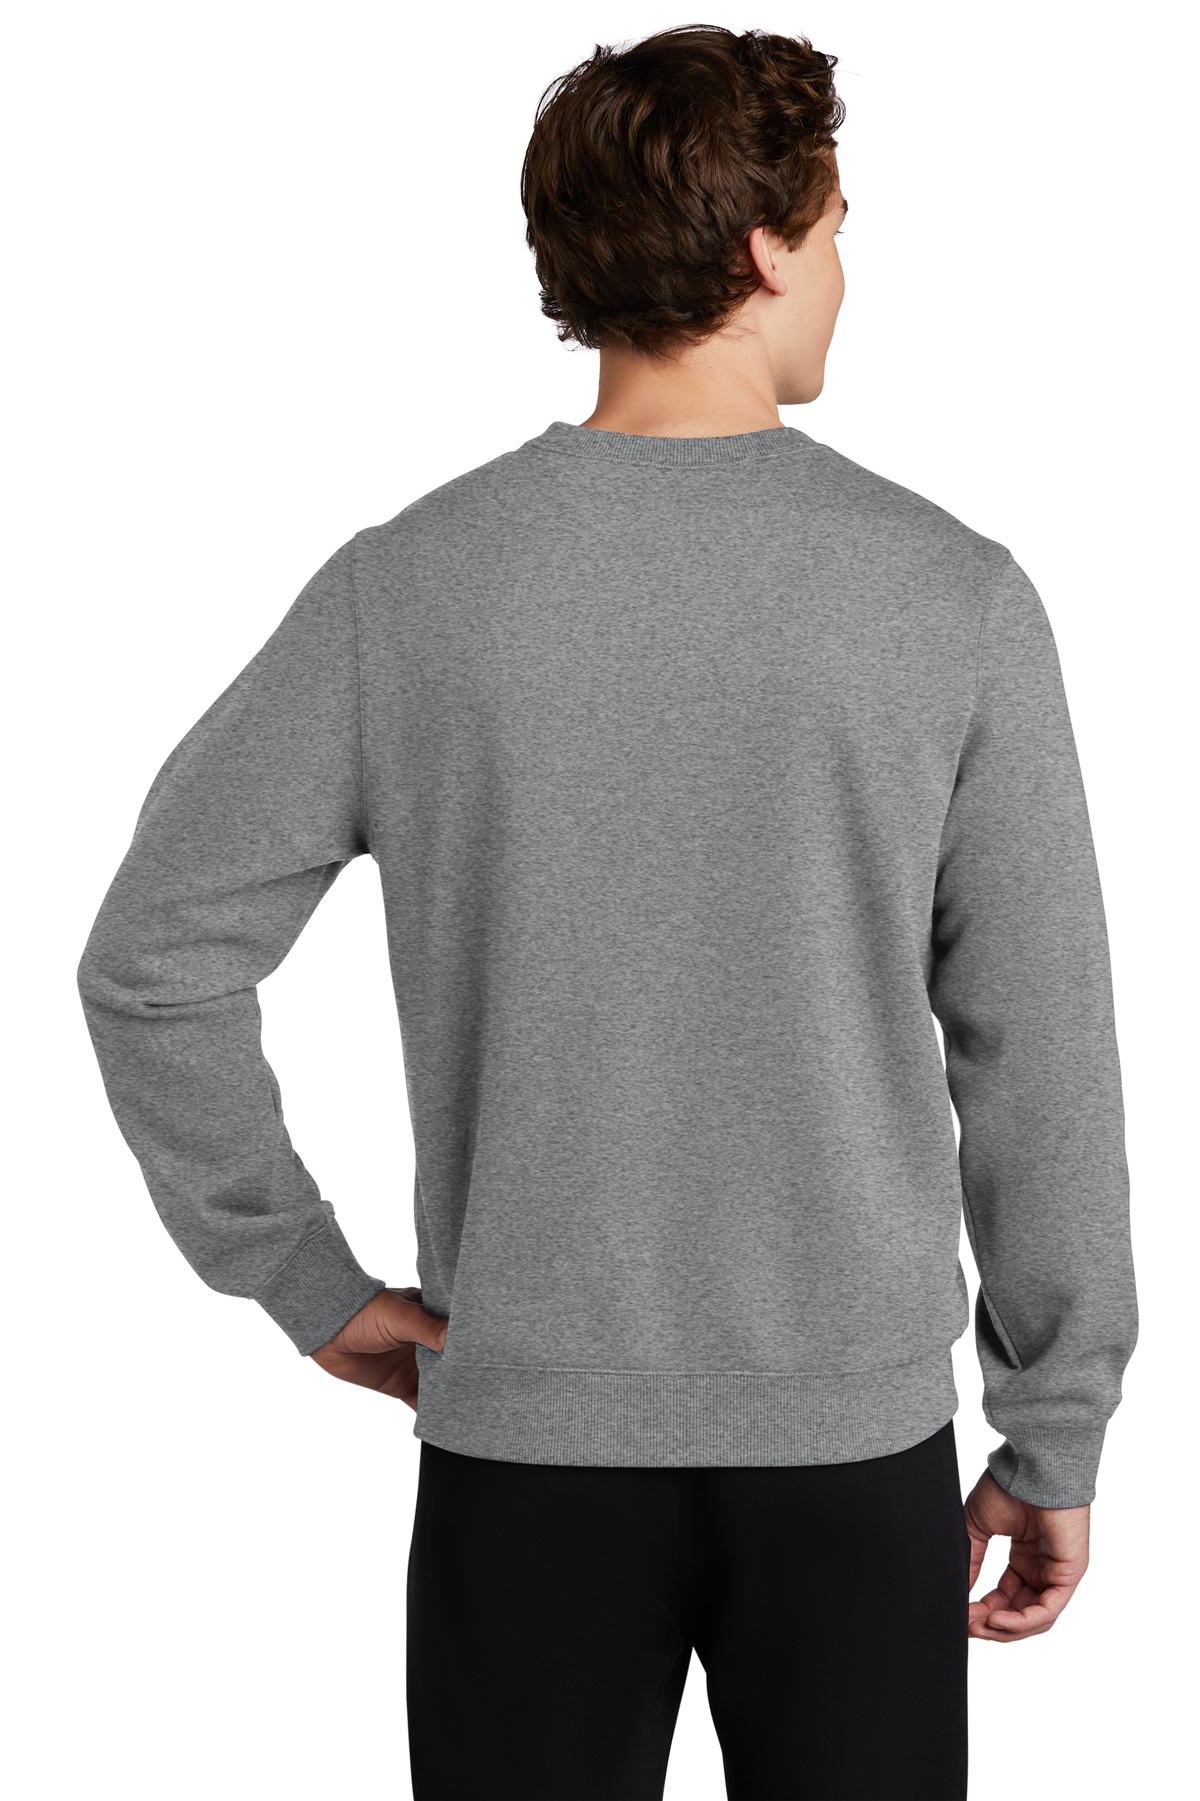 Sport-Tek Crewneck Sweatshirt | Product | SanMar